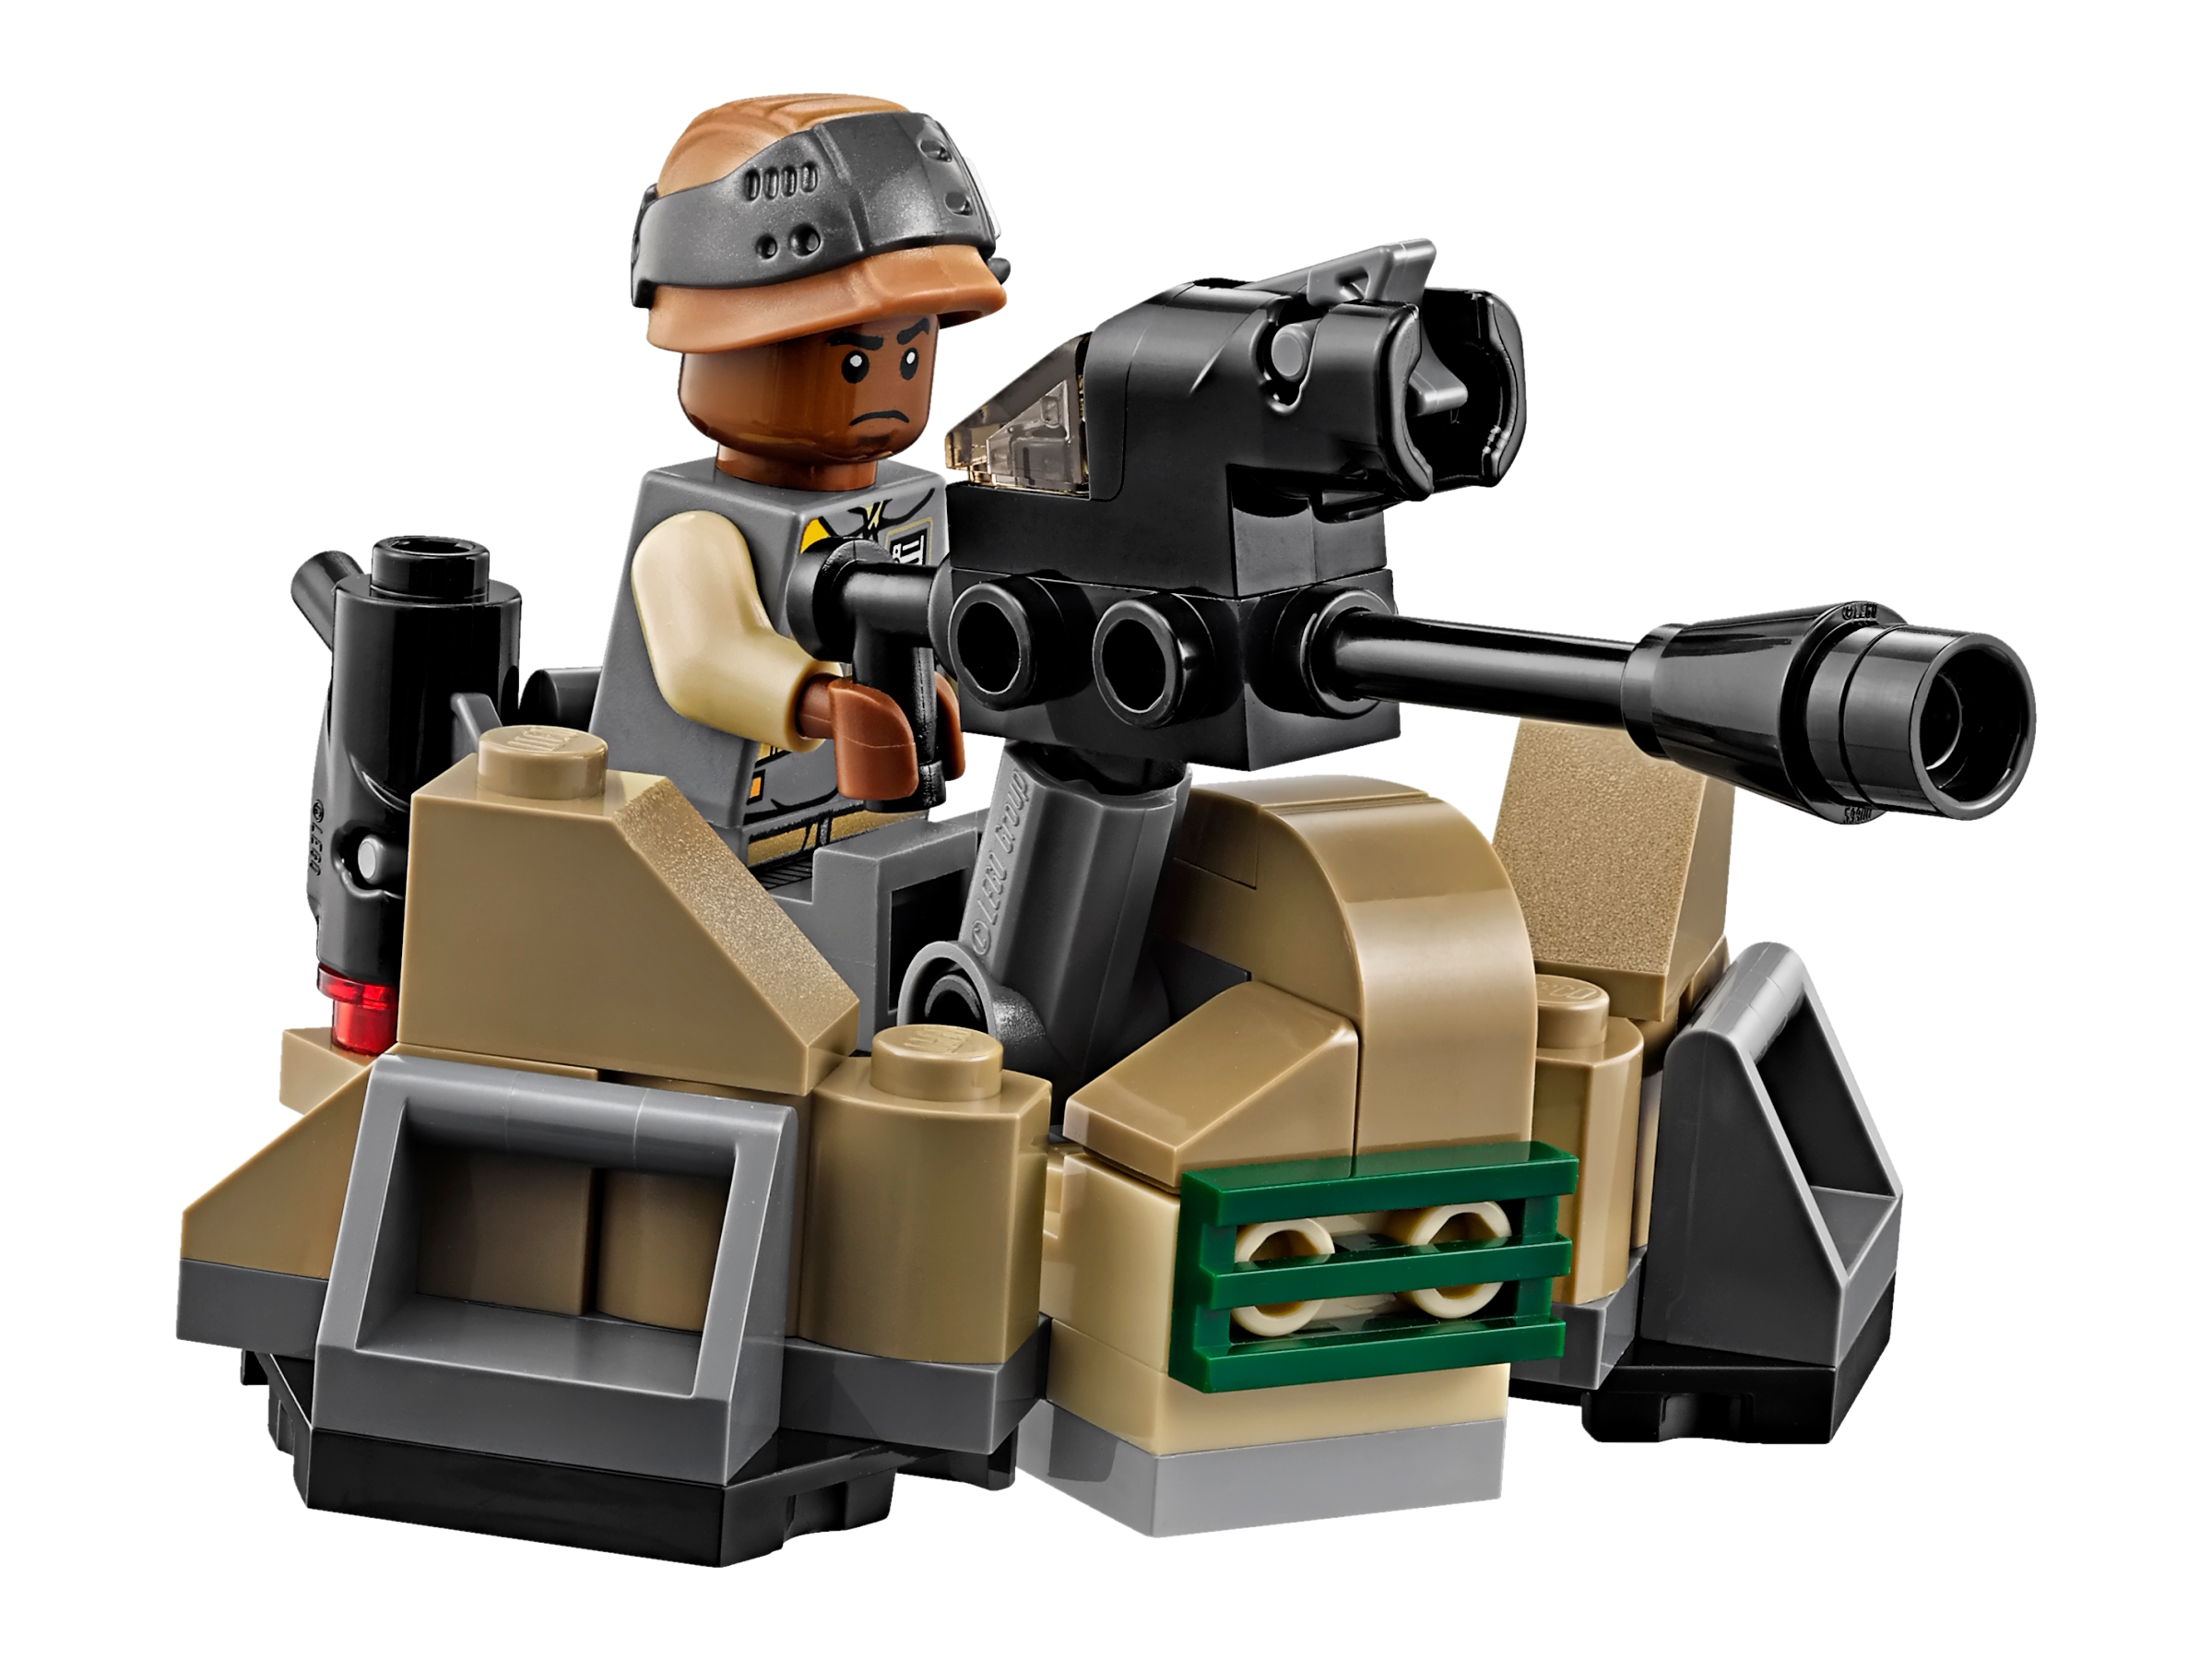 rebel trooper-polybag figurine figure-set 75164 sw804 Lego star wars 